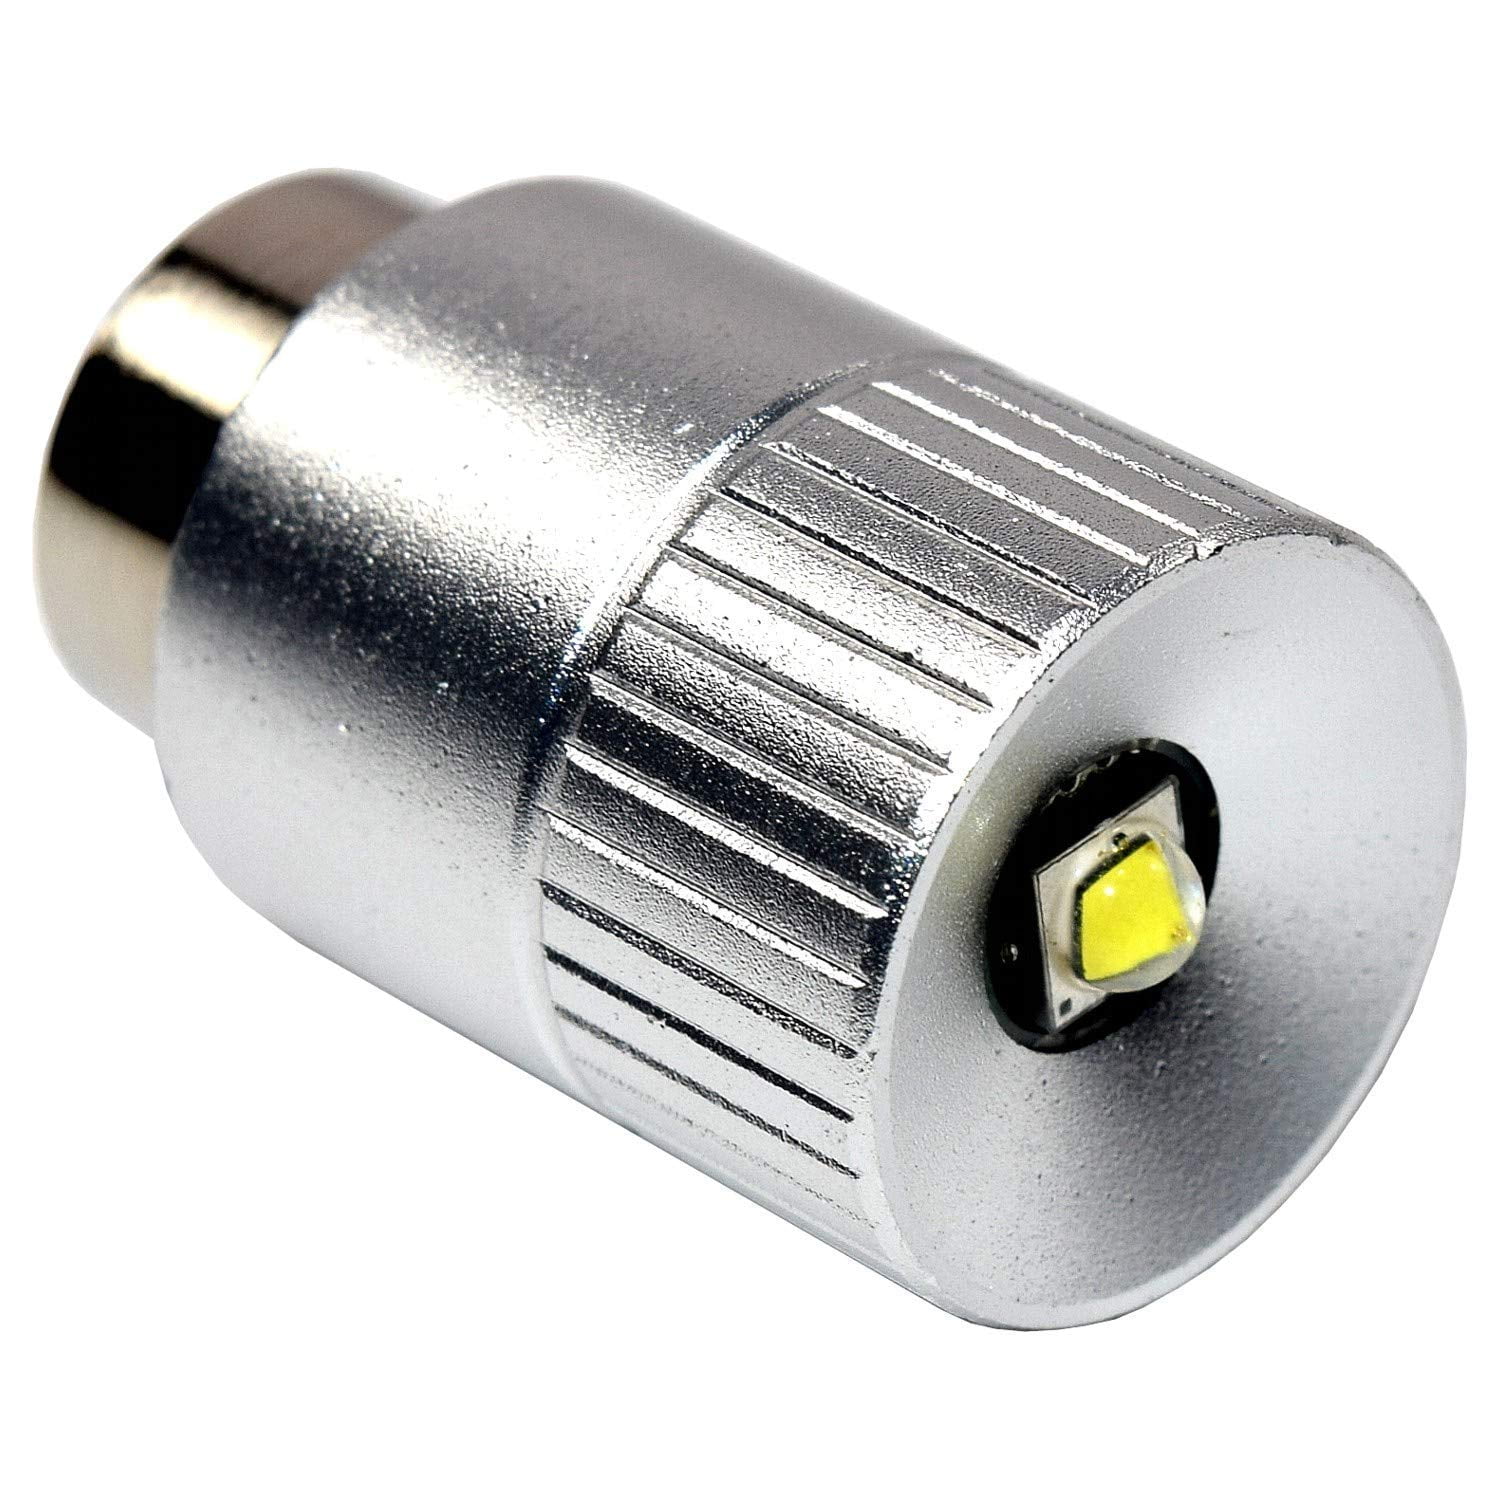 LED Upgrade Bulb Conversion maglite parts Flashlight 3 4 5 6 Cell C D light lamp 